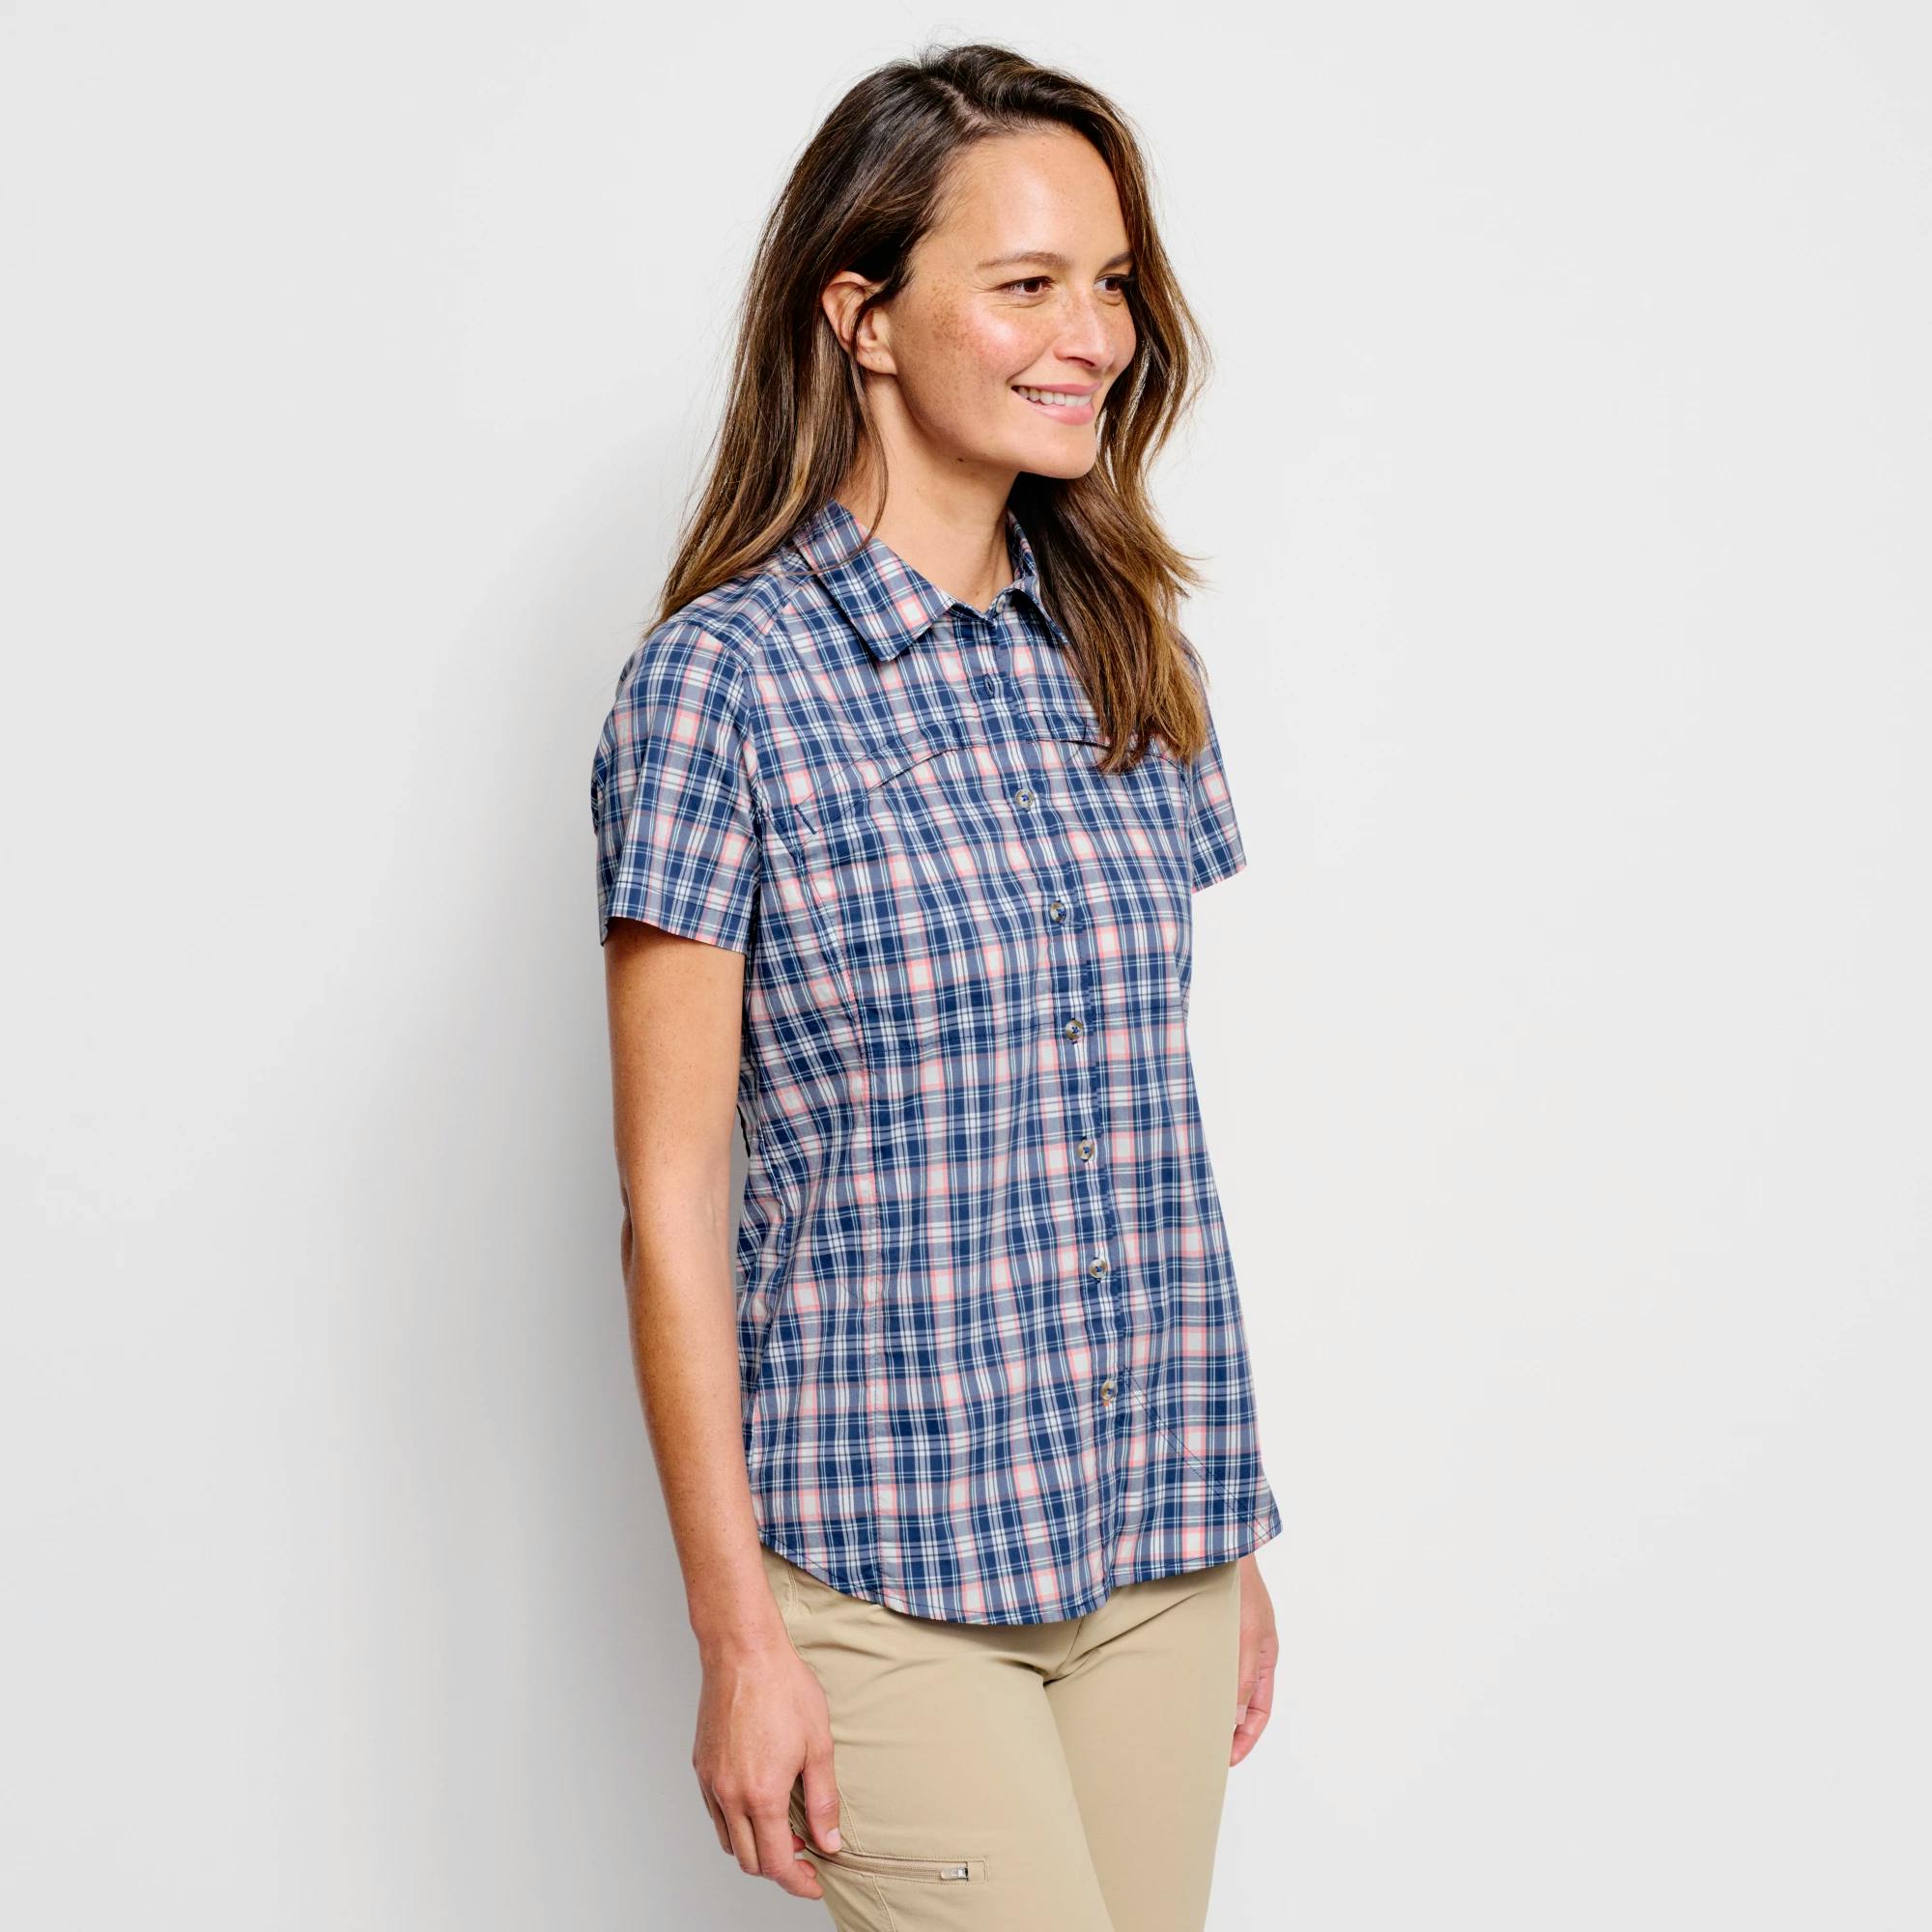 Orvis Women's River Guide Short Sleeve Tech Shirt